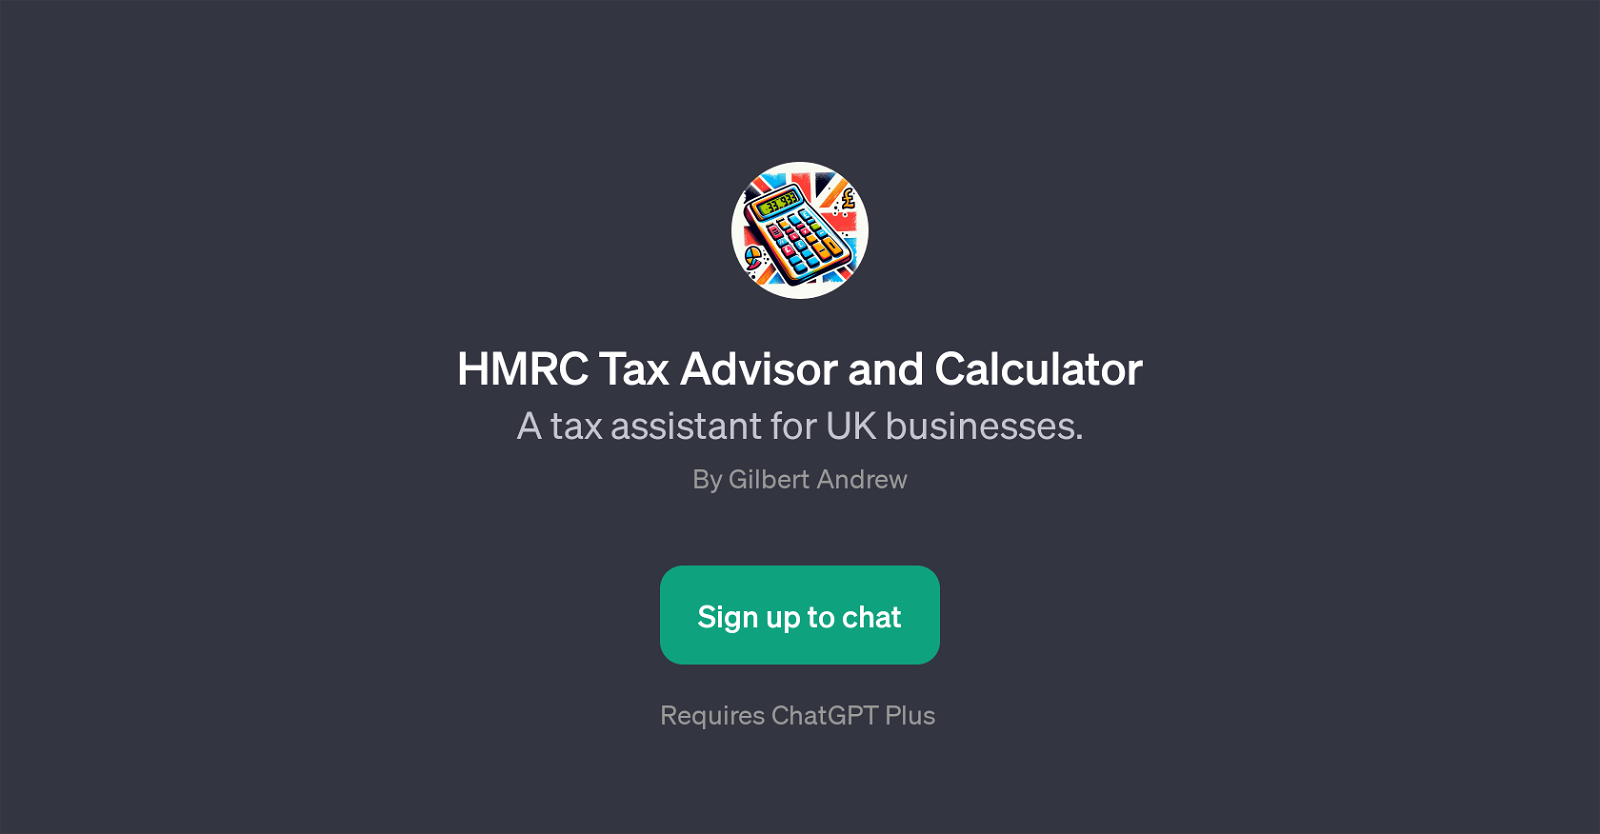 HMRC Tax Advisor and Calculator website